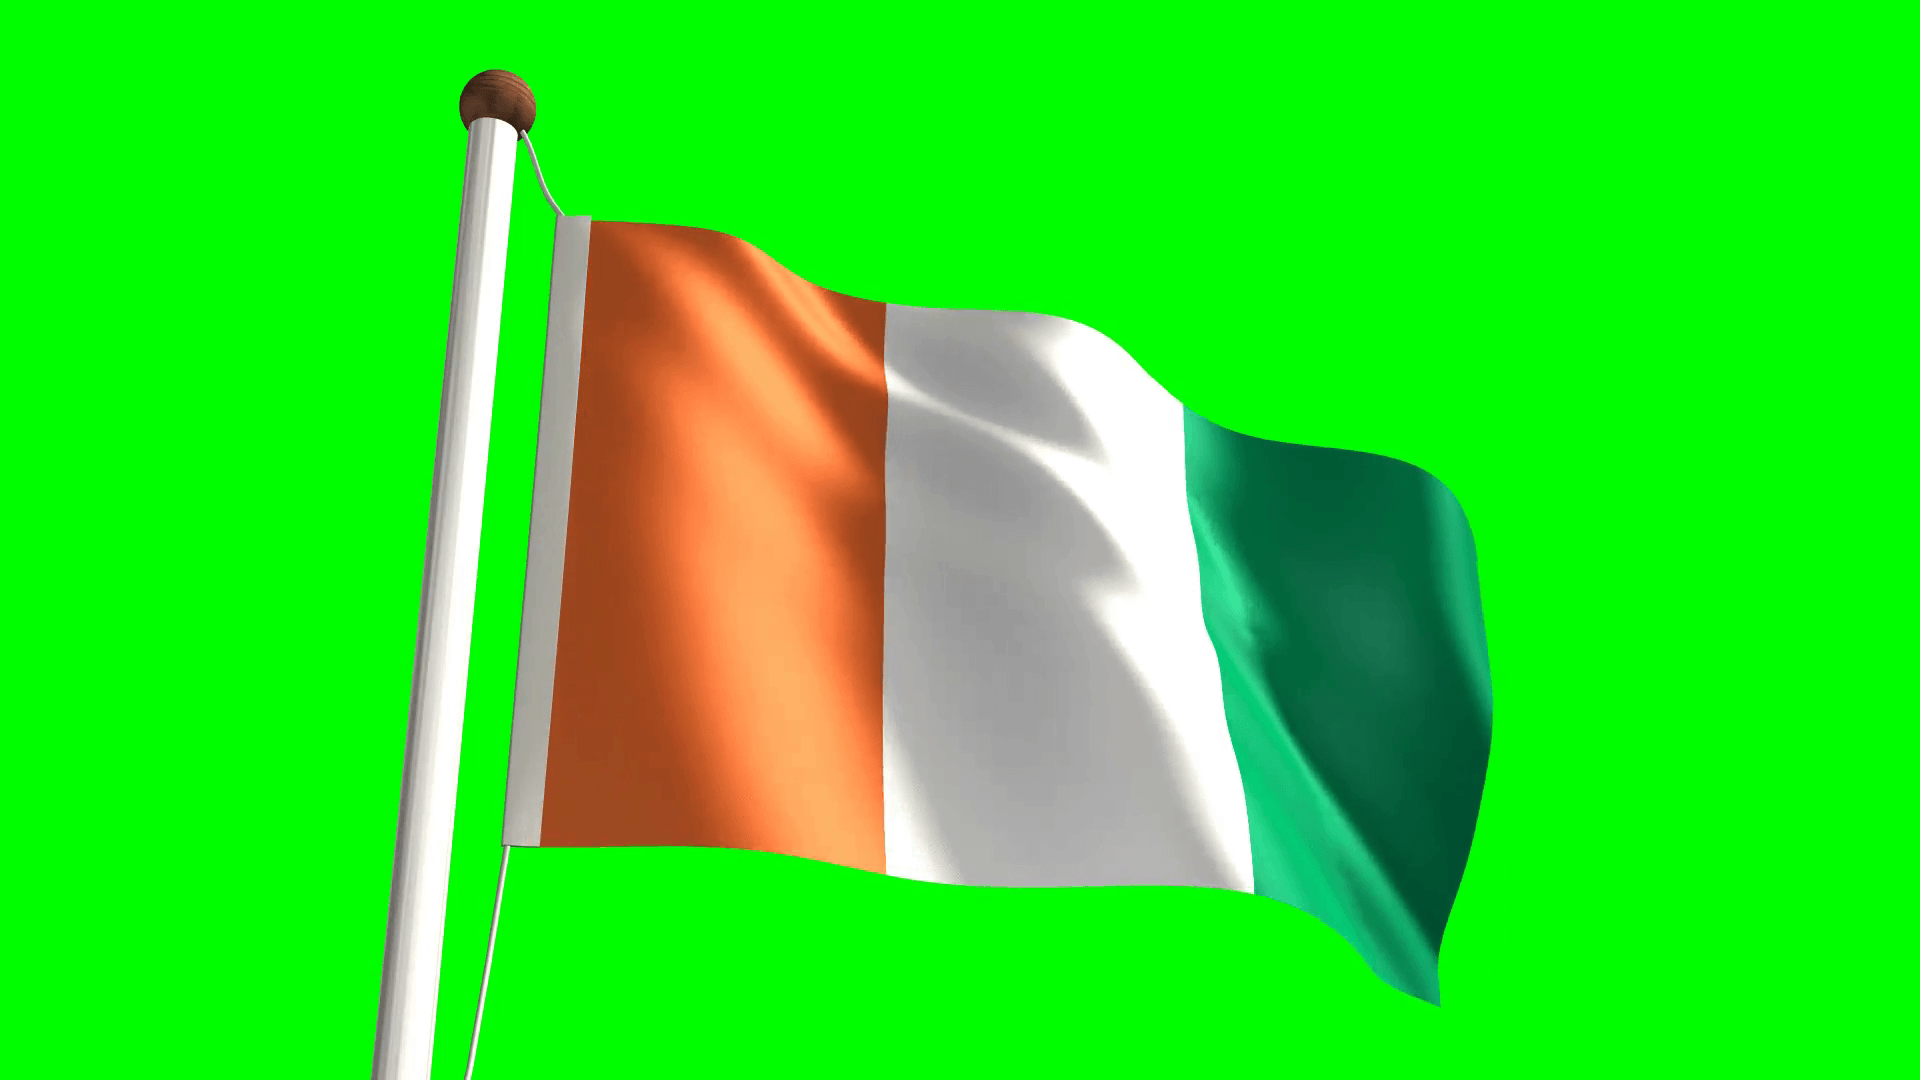 Ivory Coast flag (seamless & green screen) Motion Background